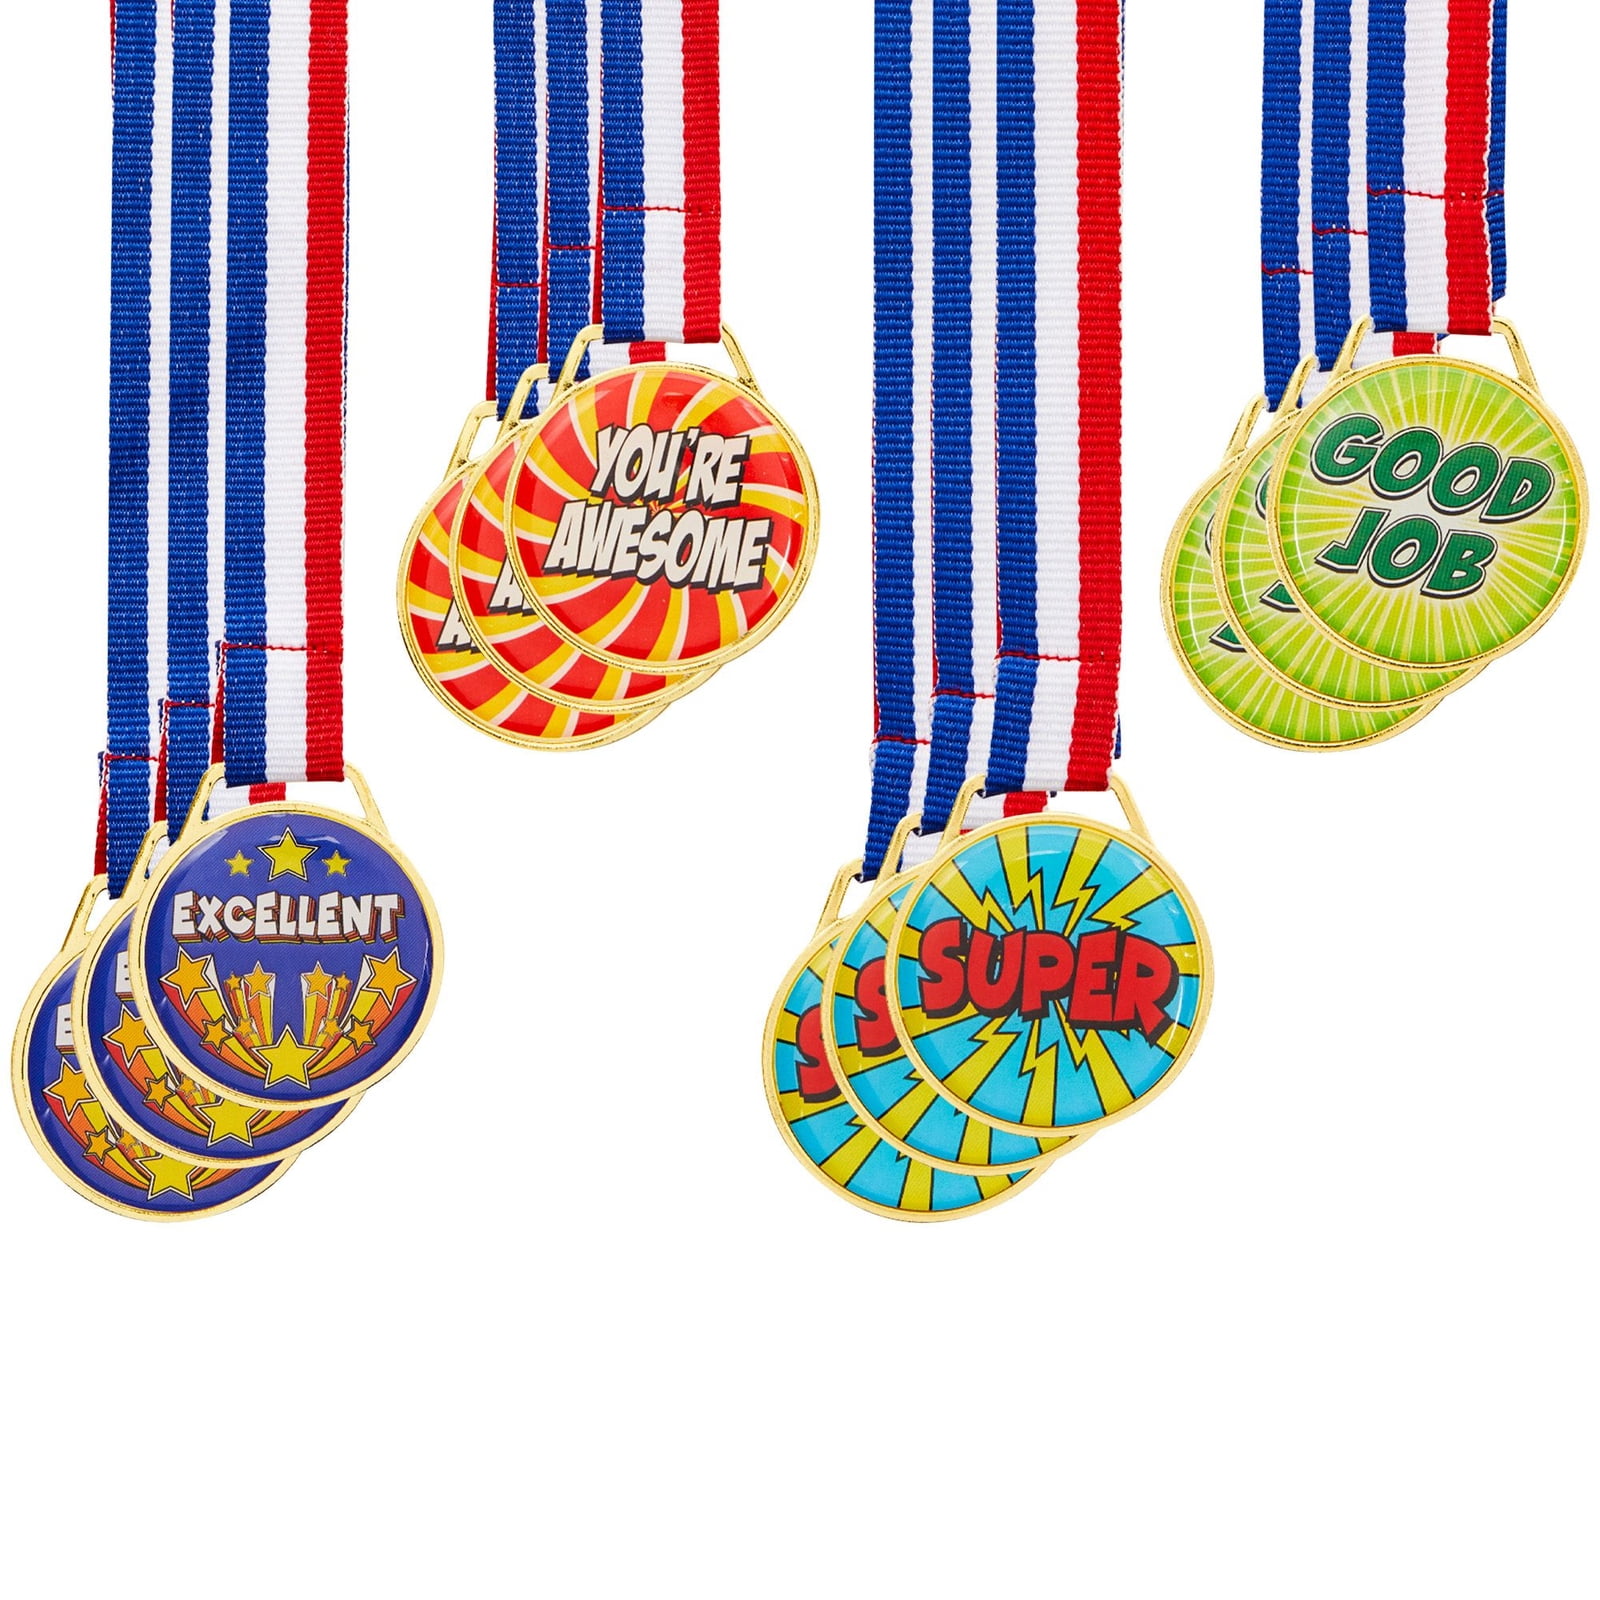 Disney Award Ribbons Children's Party School Contest Ribbon Spelling Art More! 